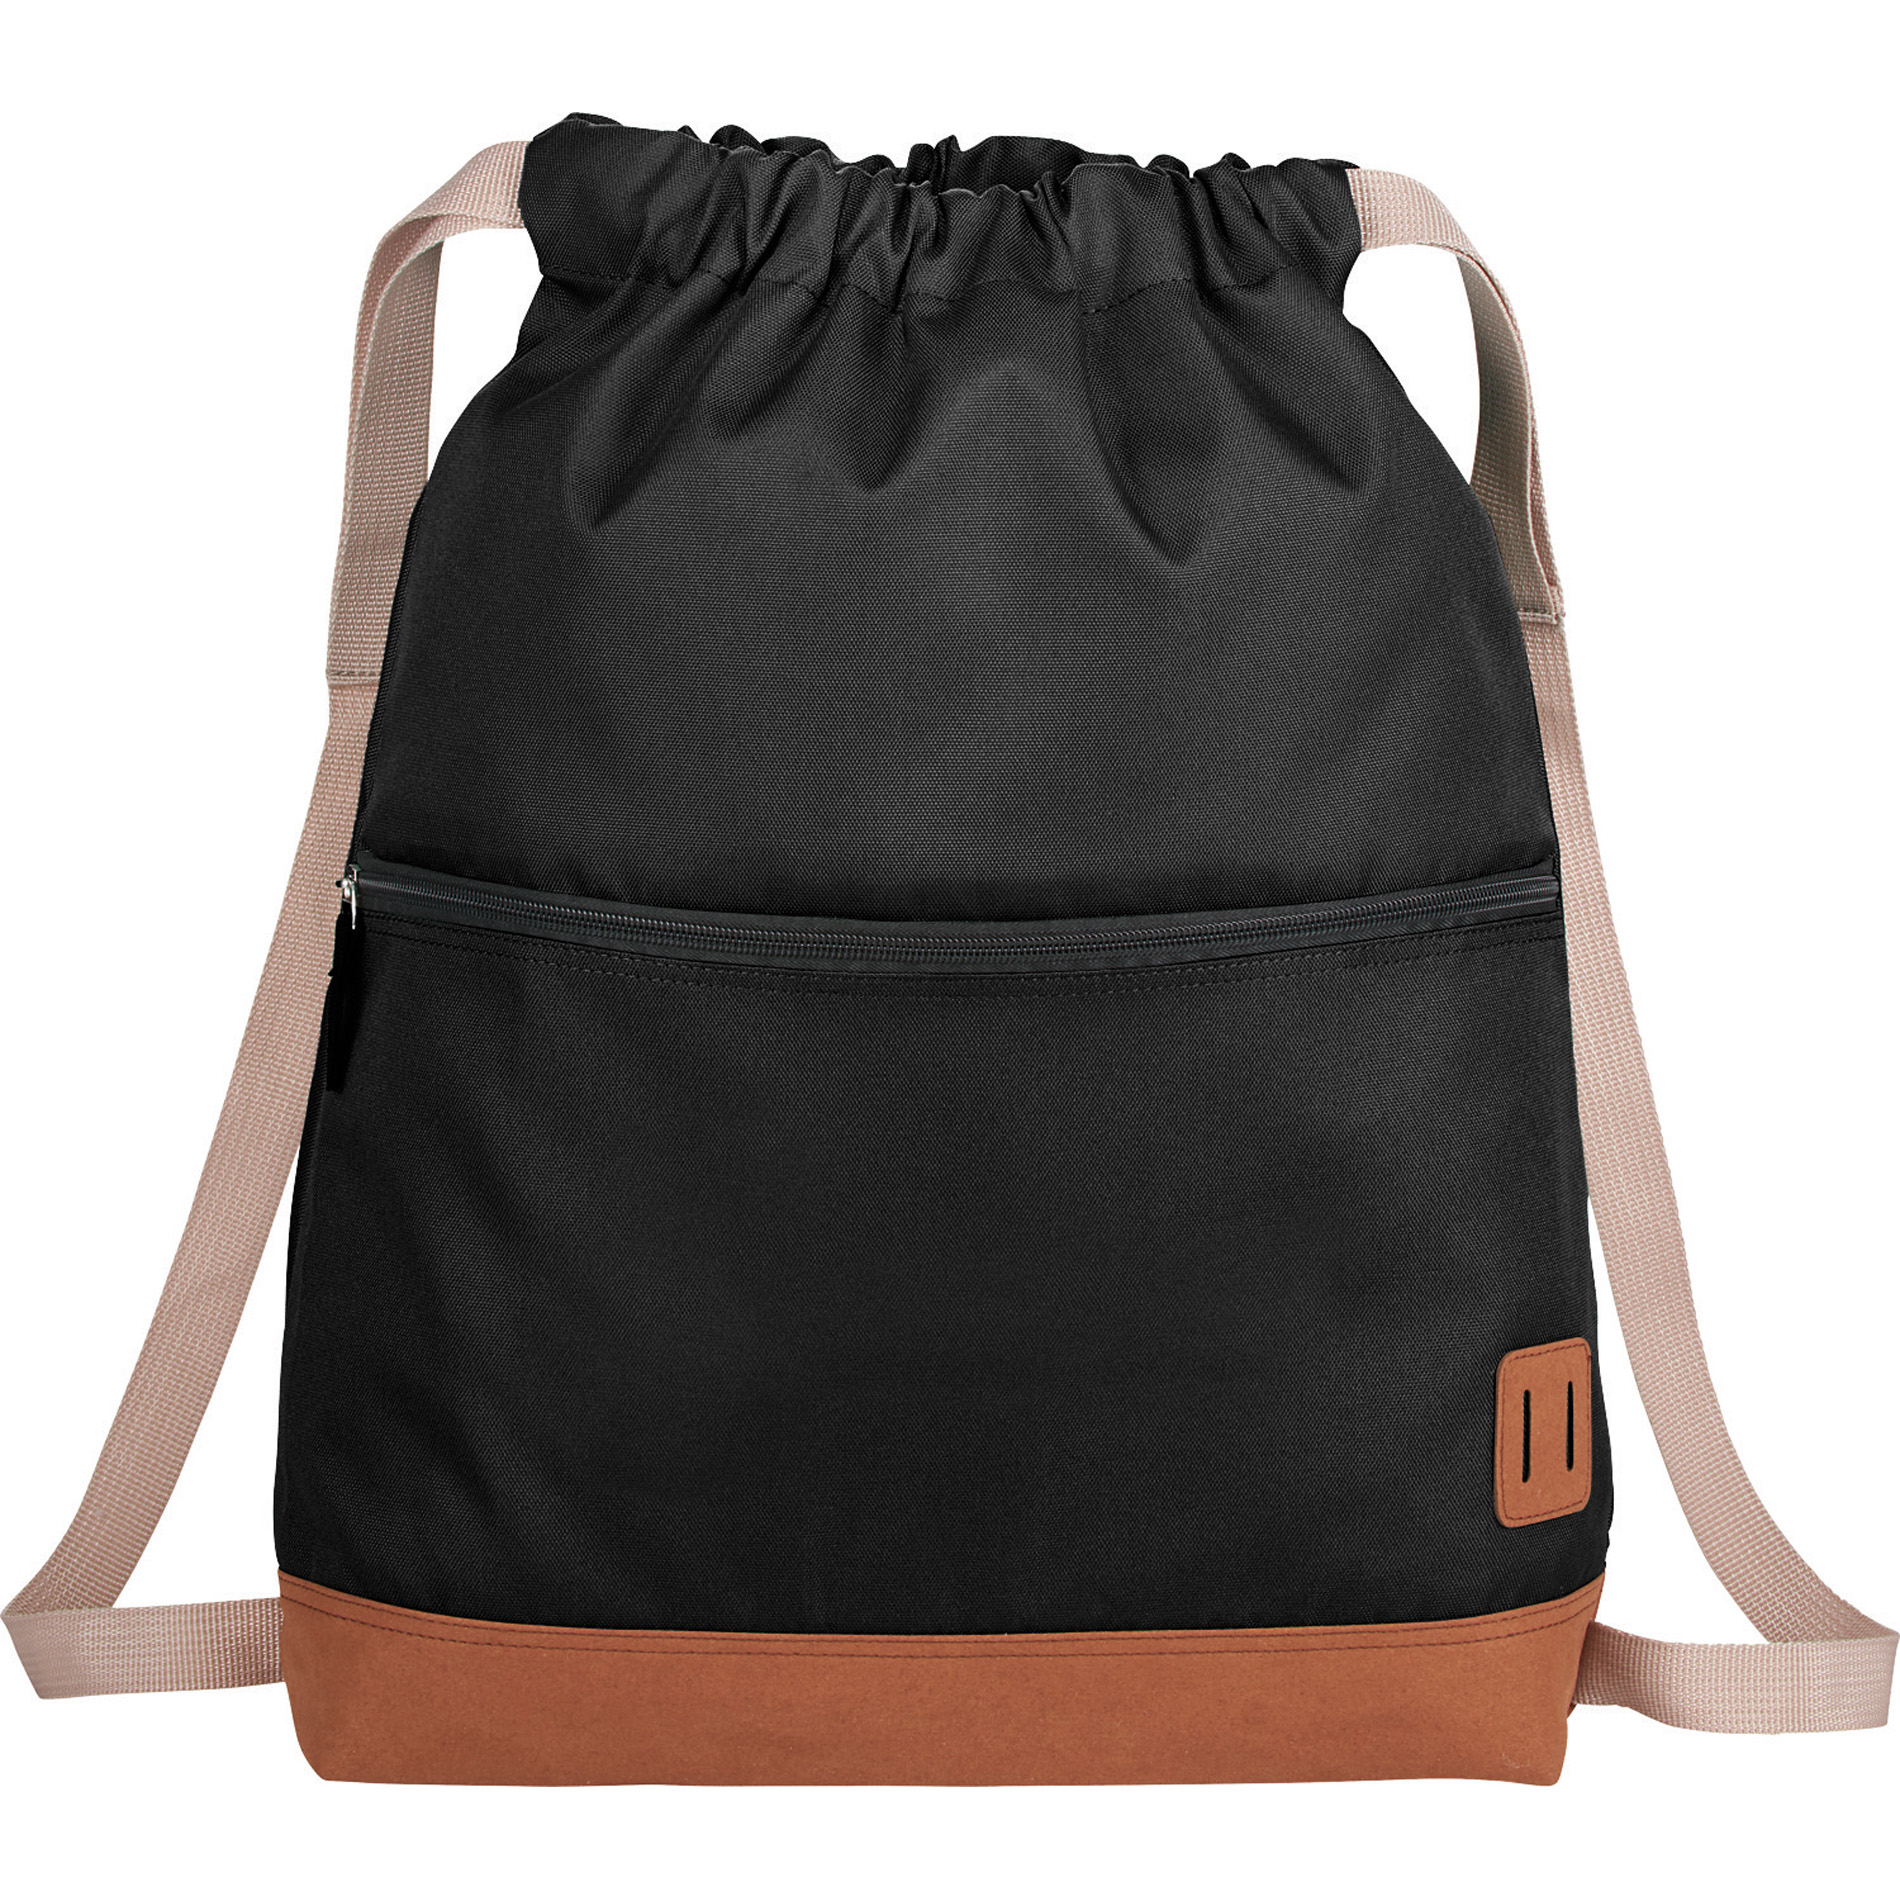 LEEDS 3250-09 - Cascade Deluxe Drawstring Backpack